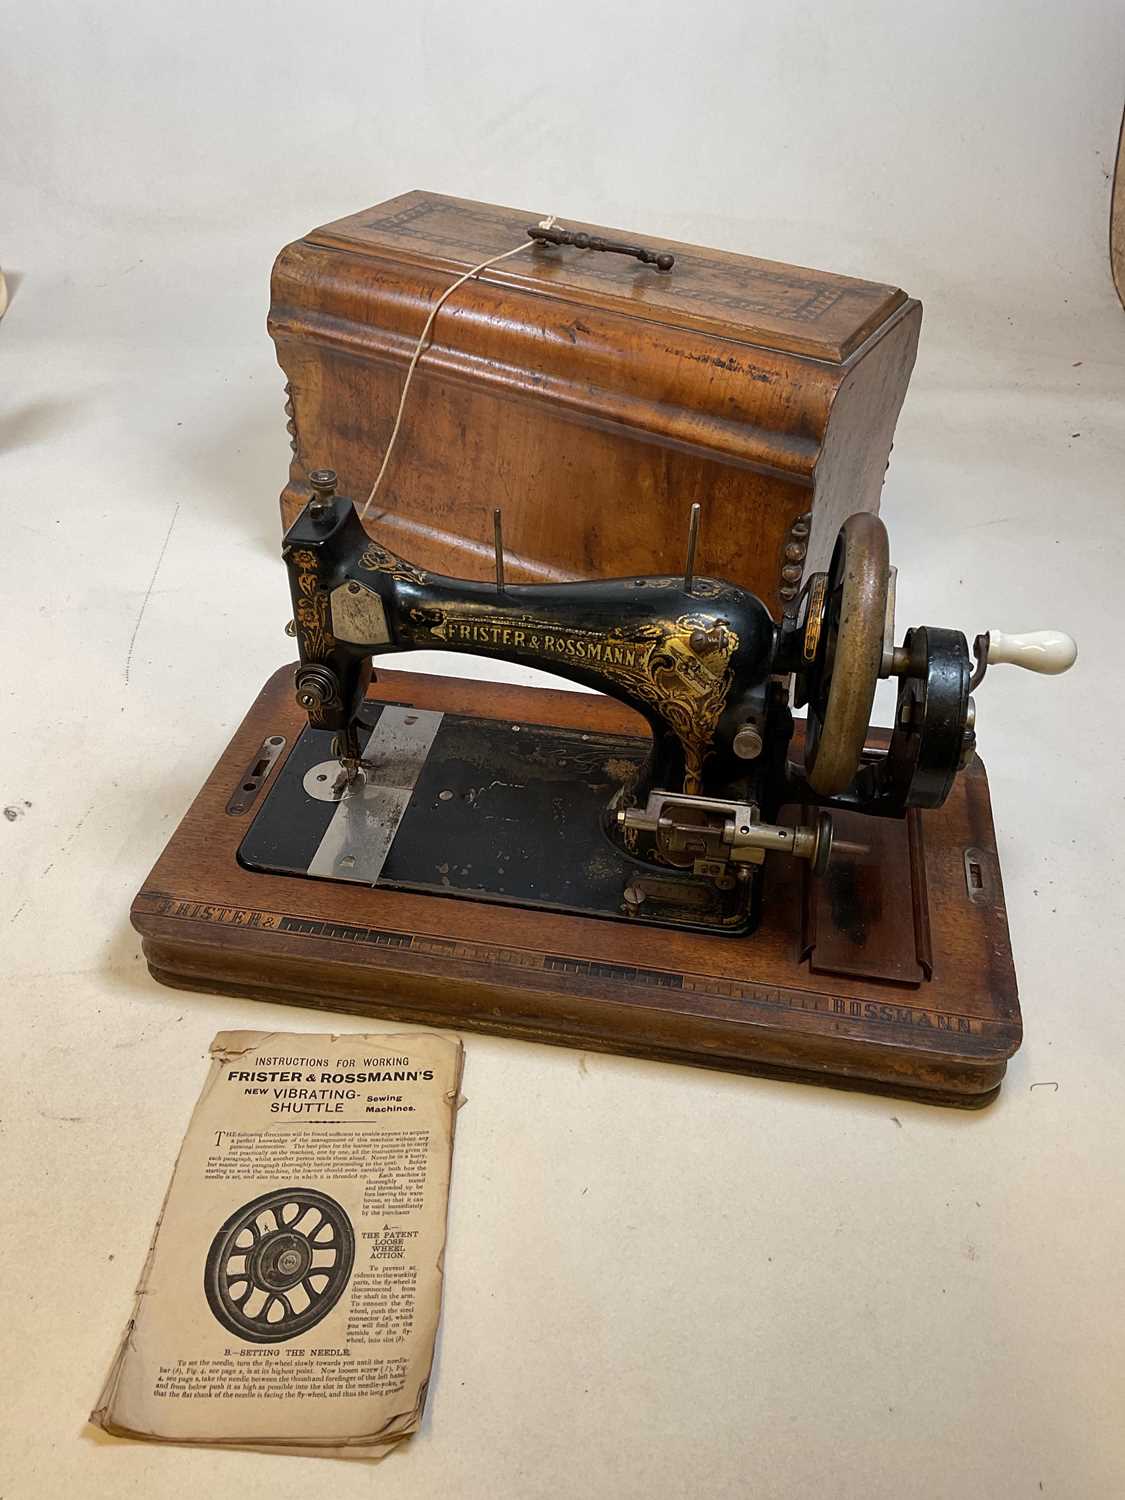 A walnut cased sewing machine,